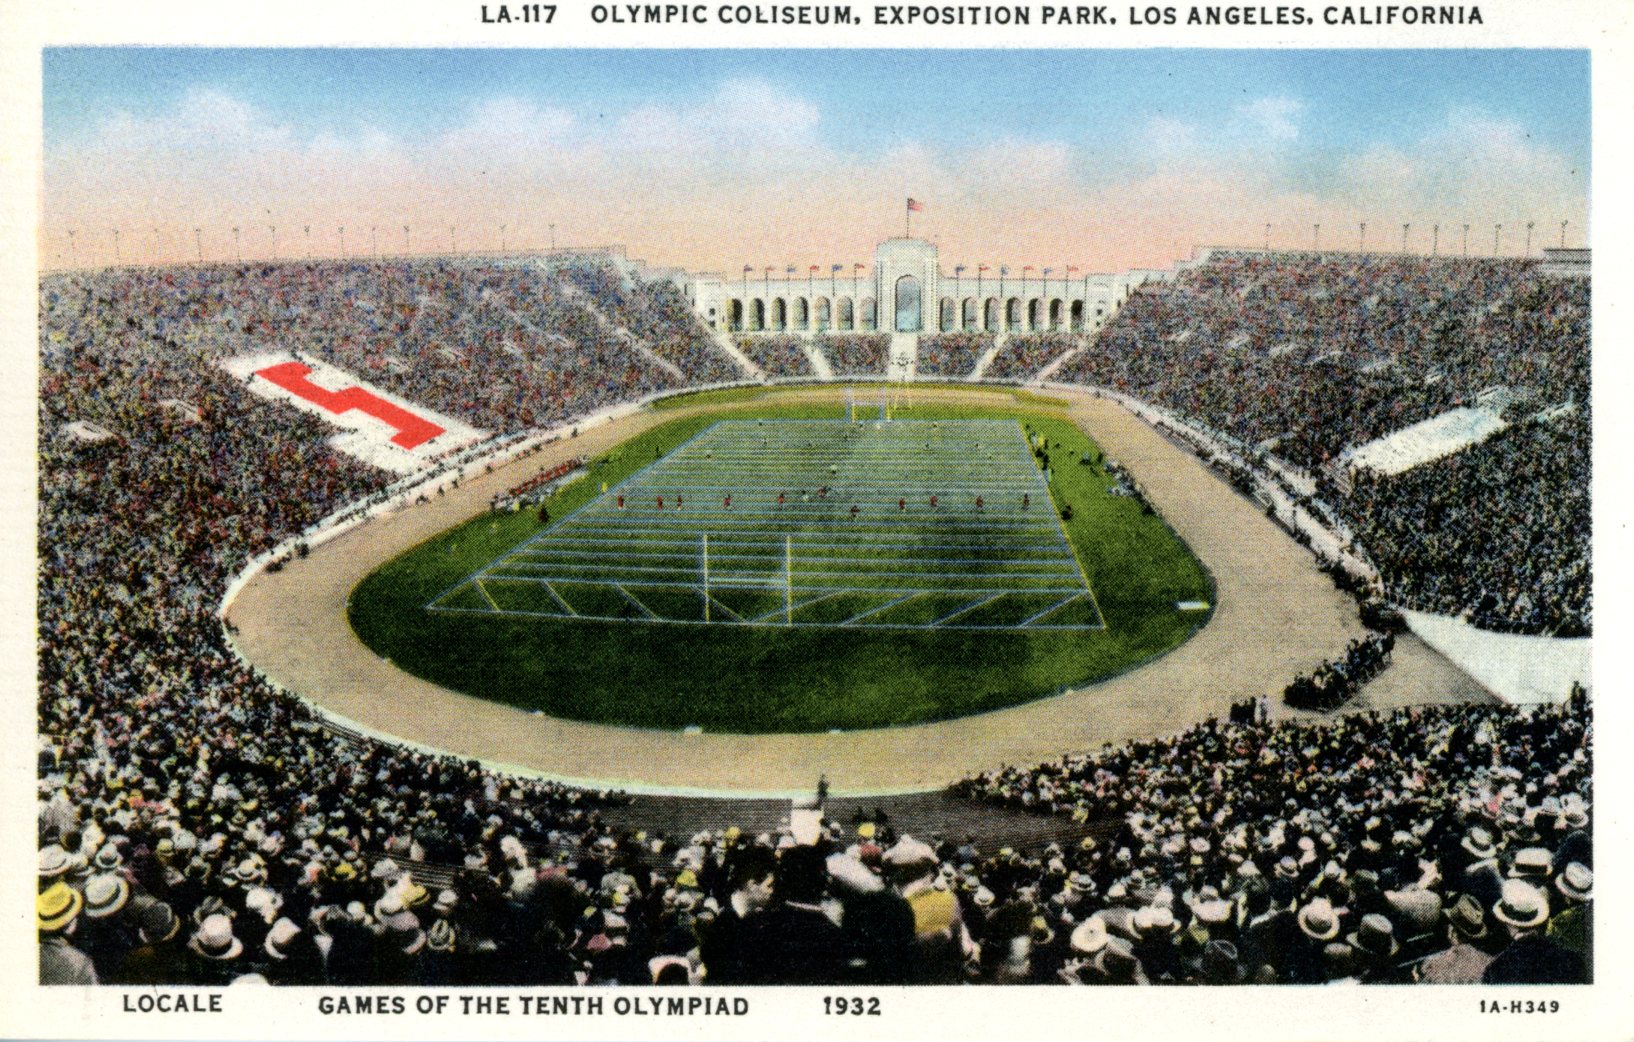 L.A. RAMS HEADING TO SUPER BOWL LIII - Los Angeles Coliseum